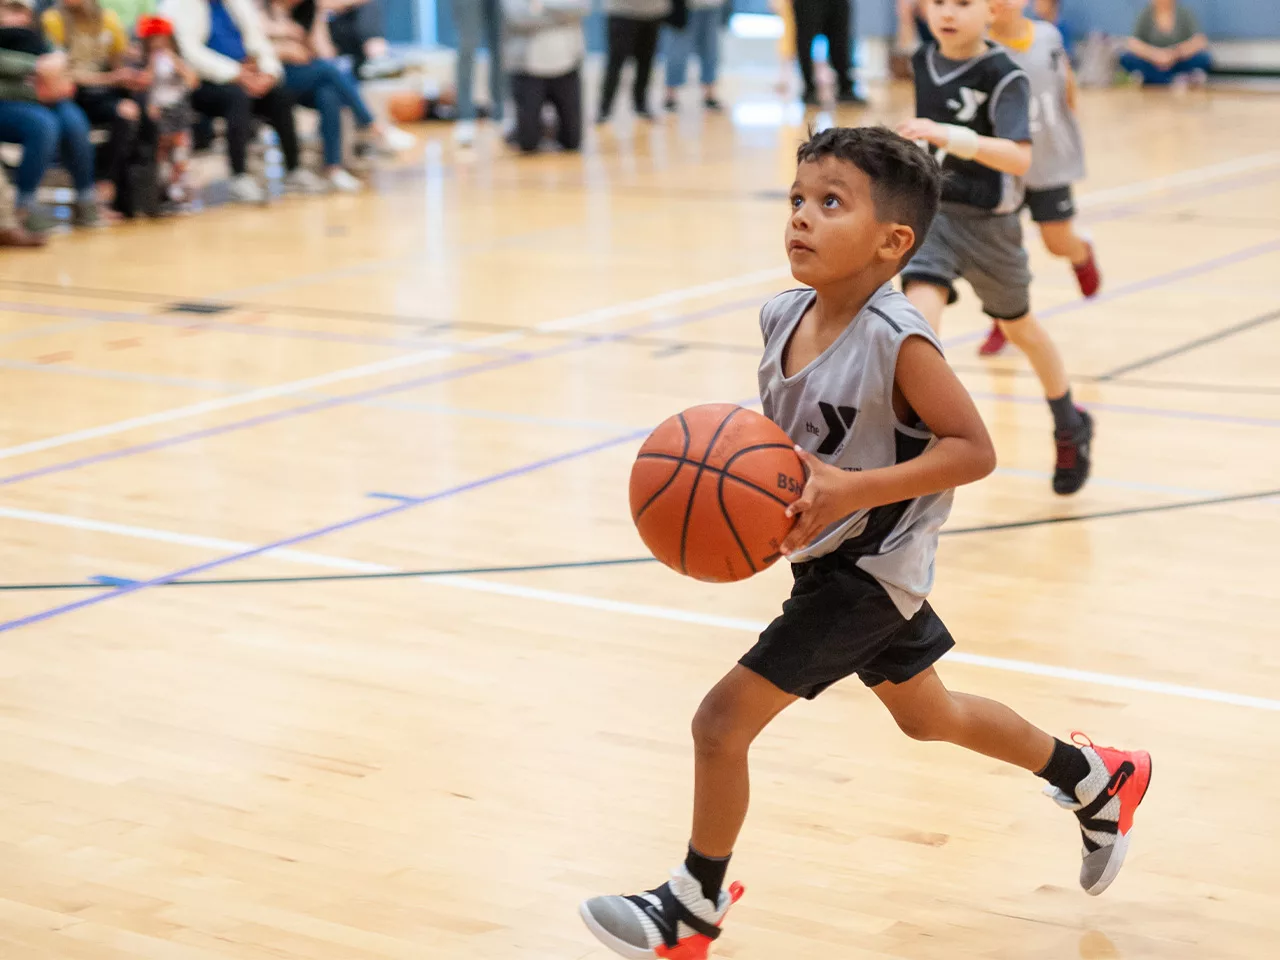 A boy holding a basketball runs looking up as if toward a basket.